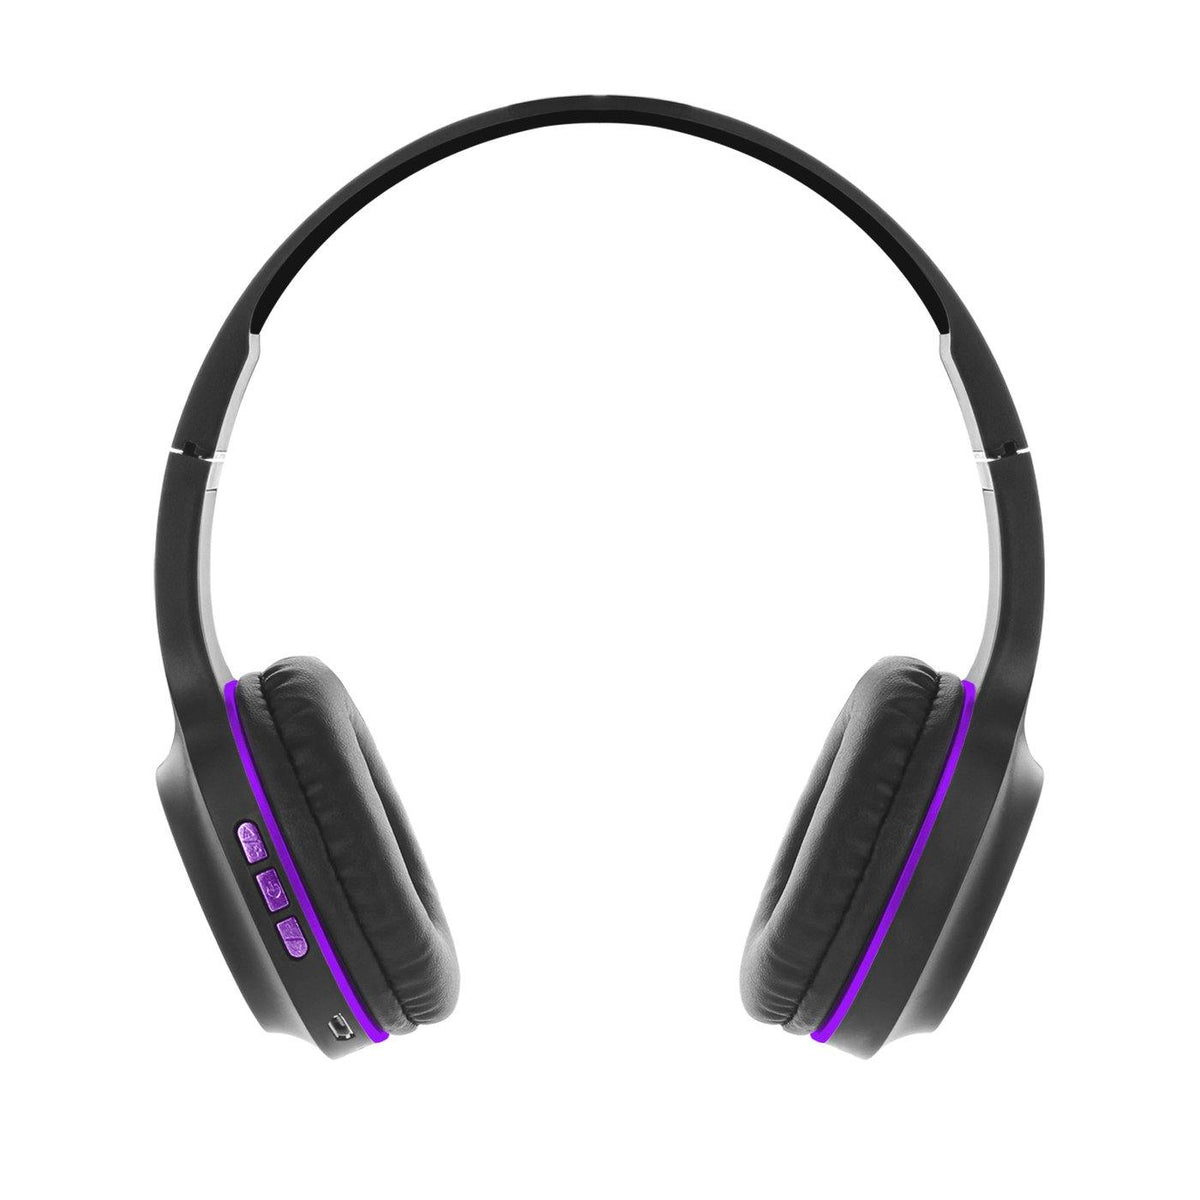 Reiko Sentry Industries Bt105: Bluetooth Wireless Headphone With Mic Purple  –